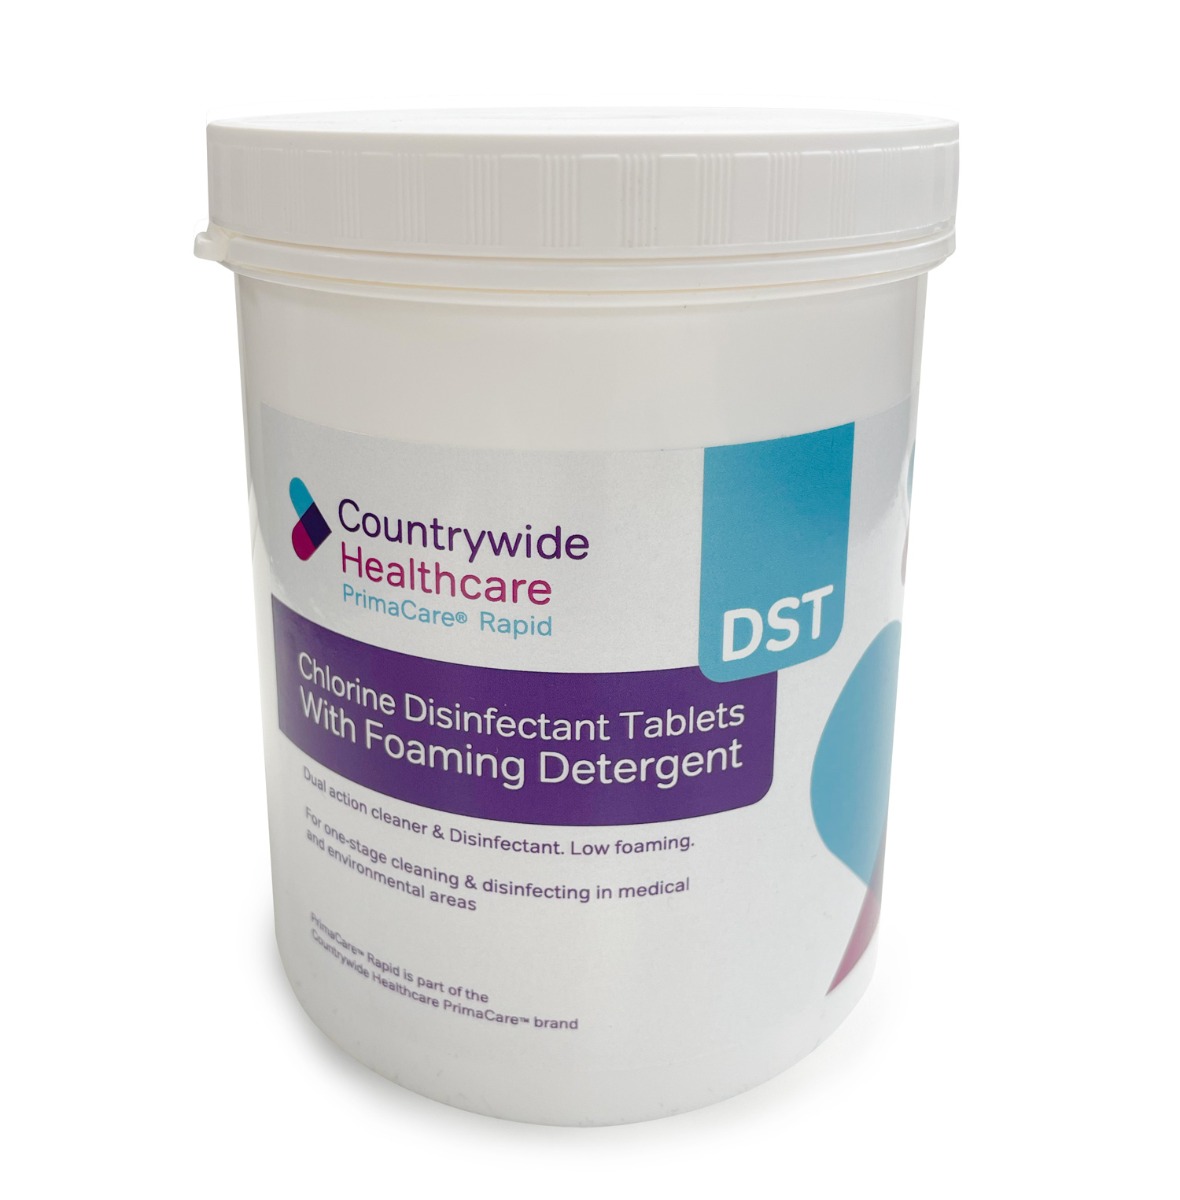 PrimaCare Chlorine Disinfectant Tablets - Foaming Detergent - Tub 200